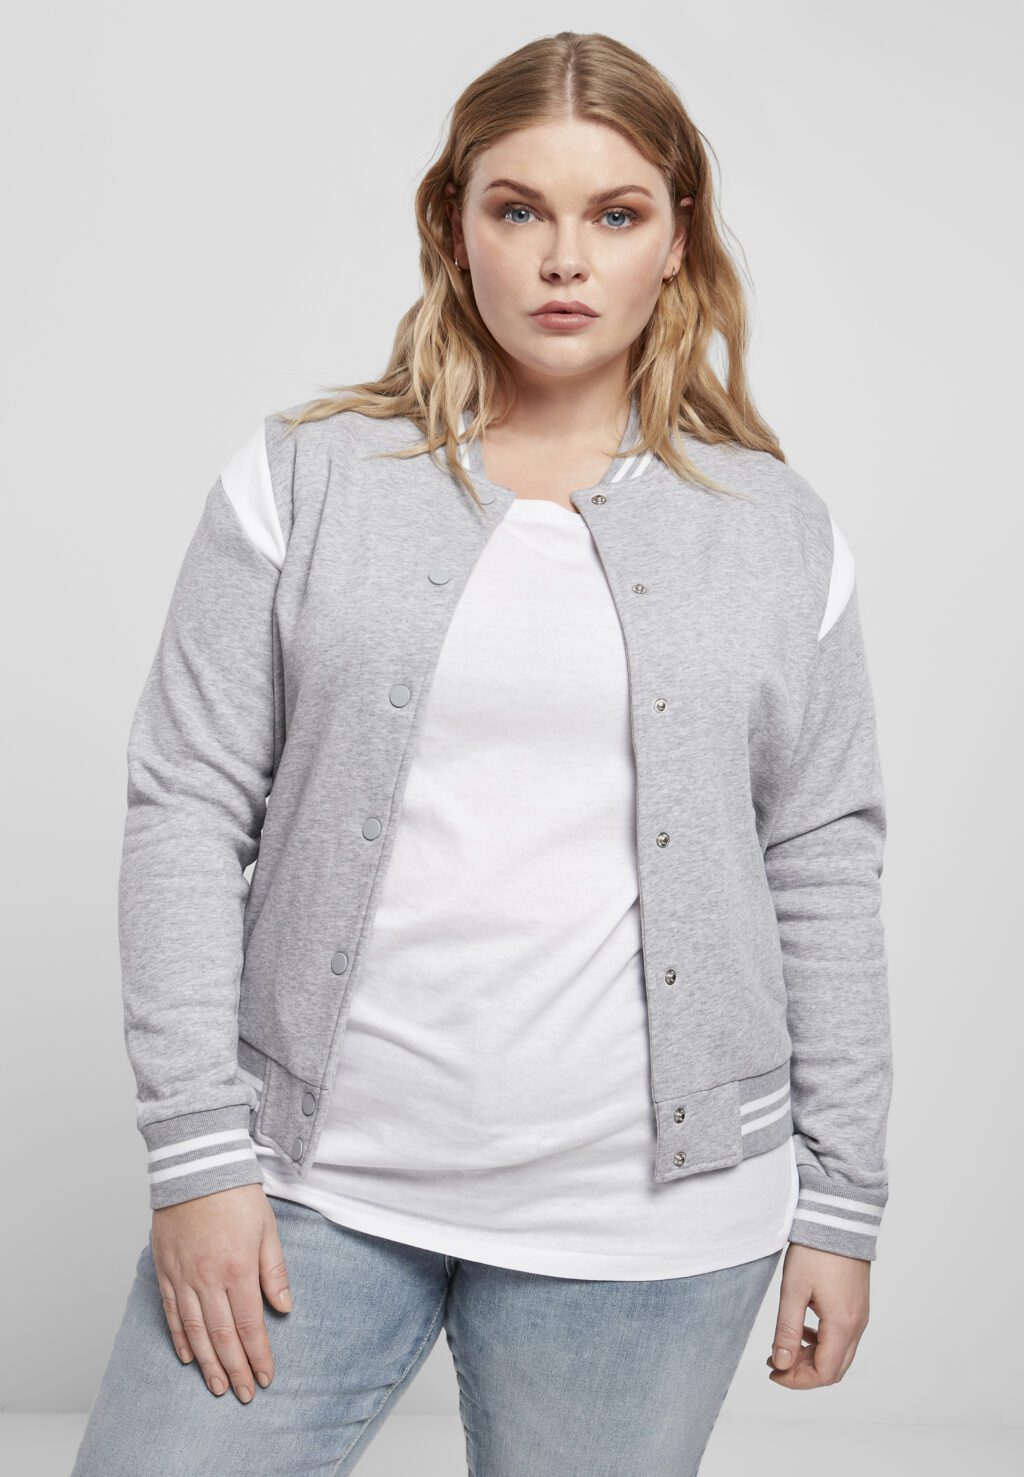 Urban Classics Ladies Organic Inset College Sweat Jacket grey/white TB3776